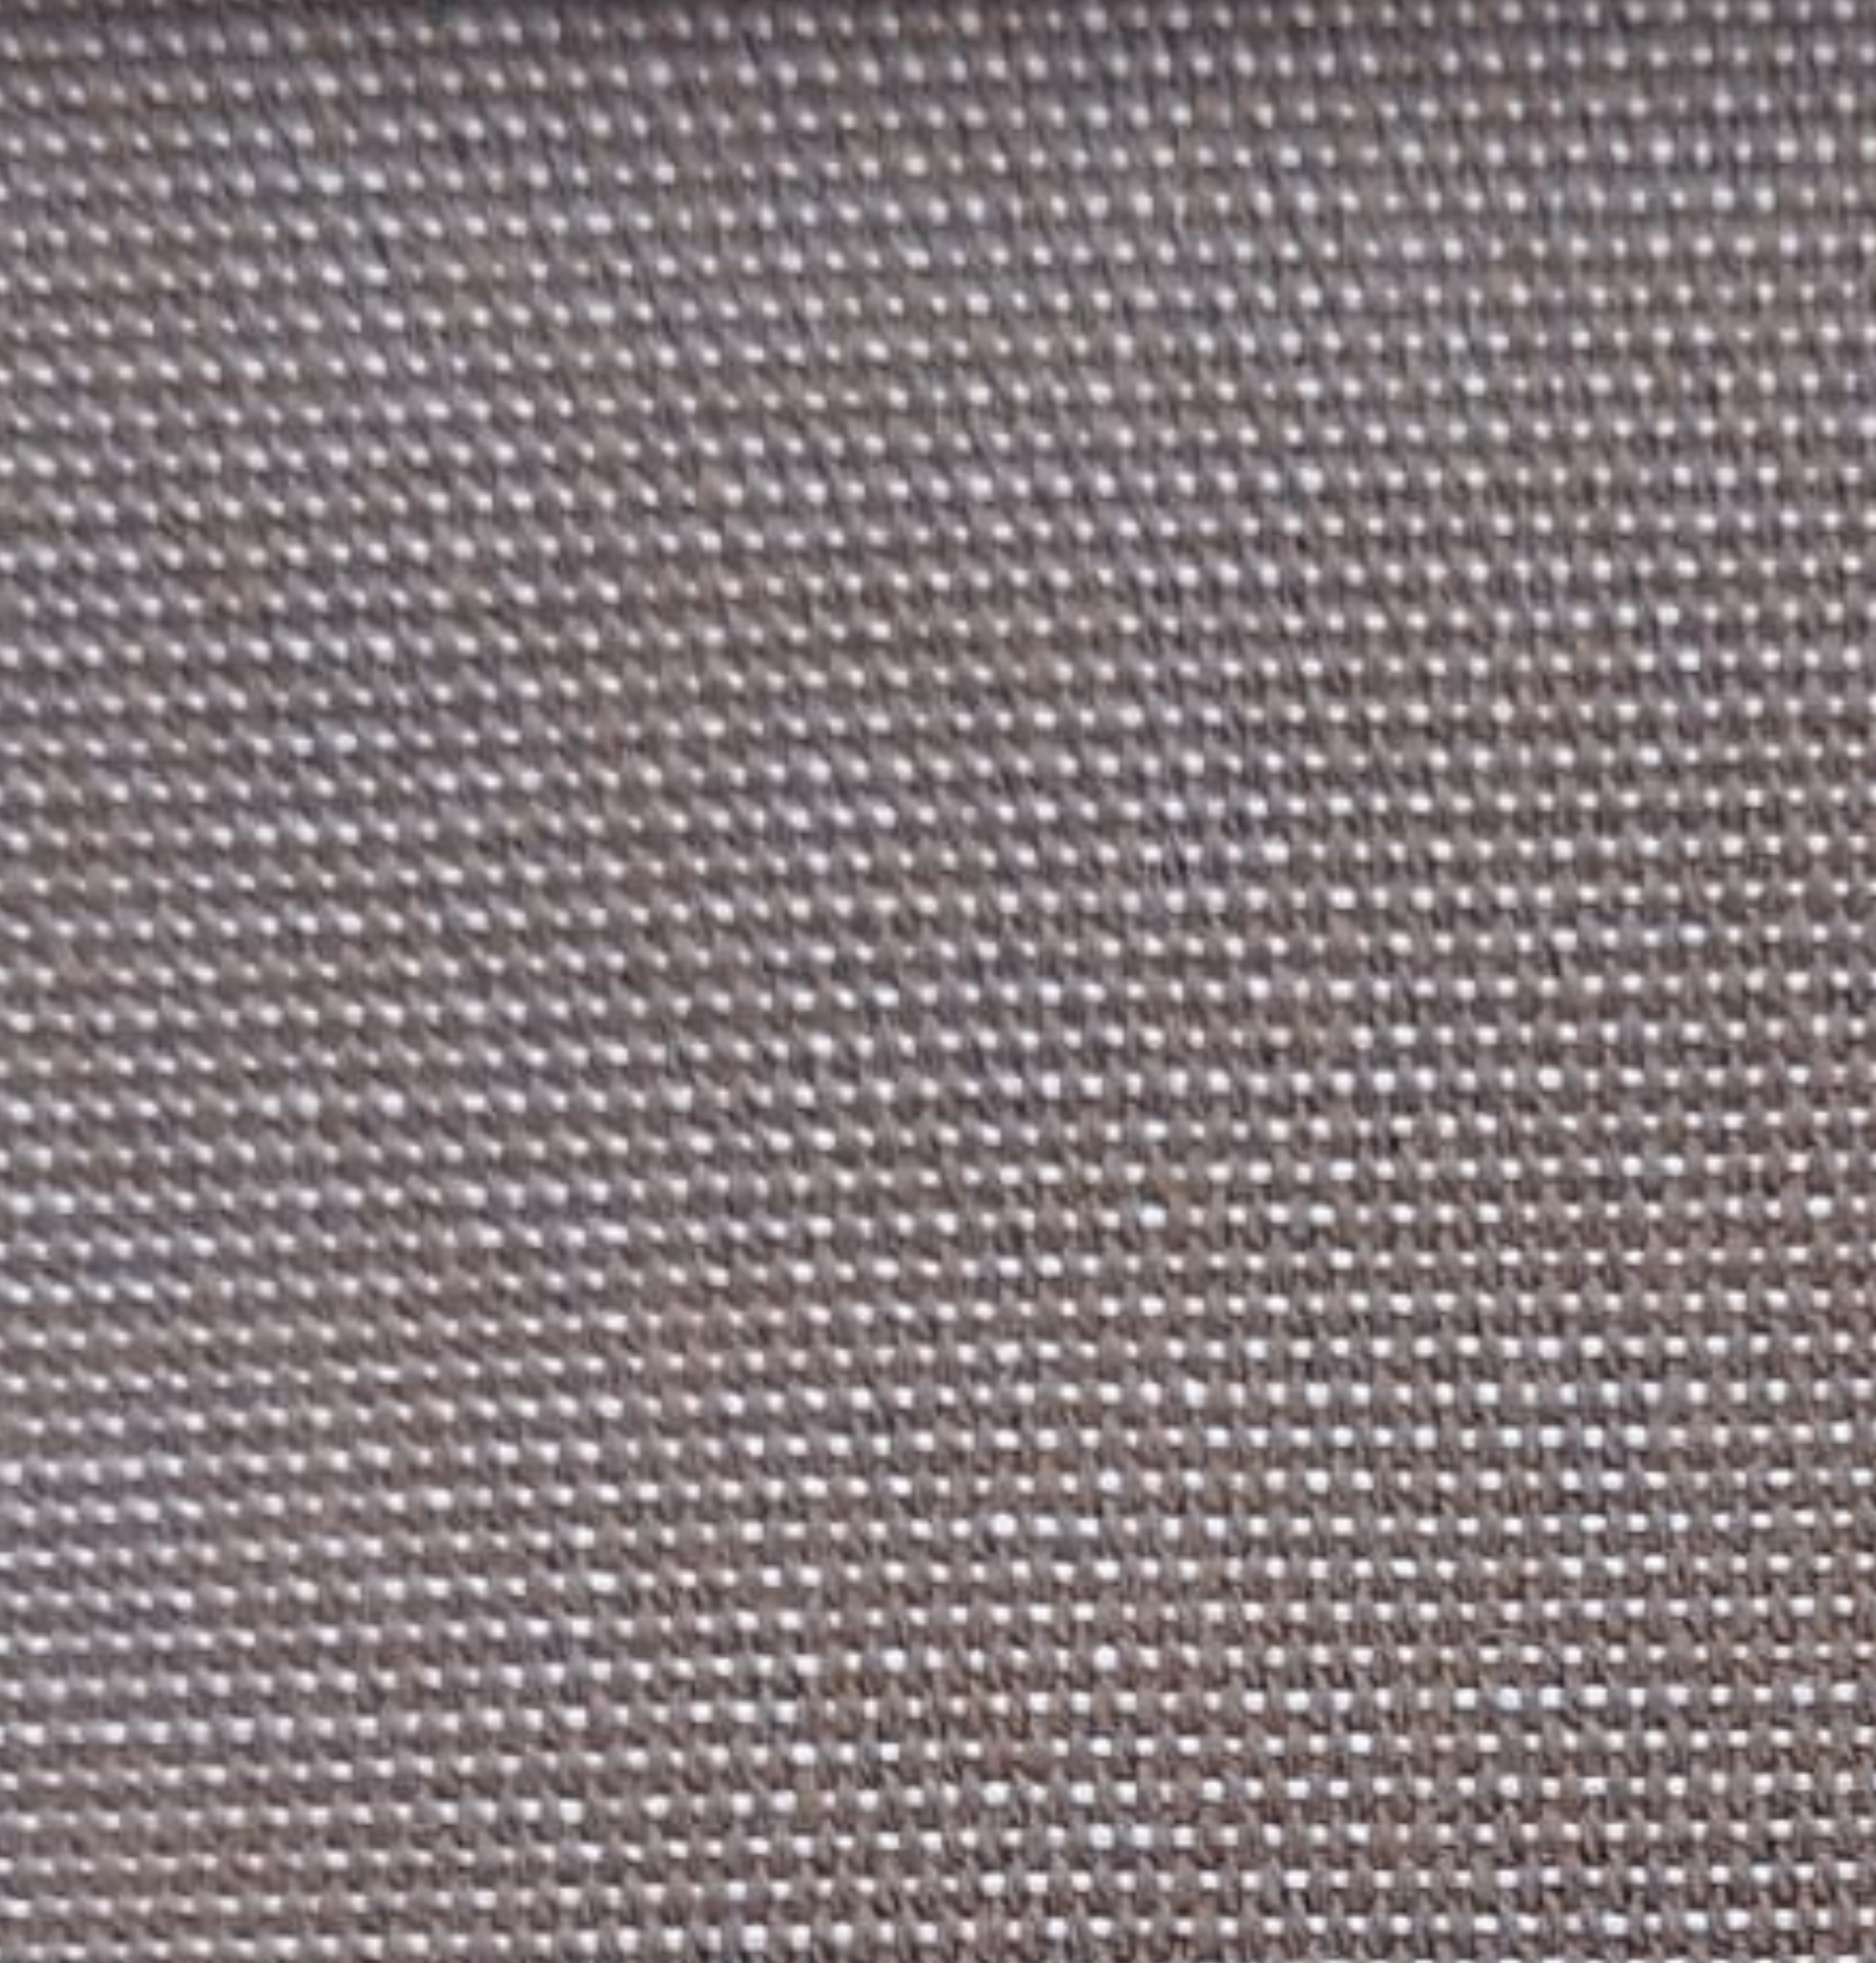 Tela al corte tapicería loneta brasil tejano marrón ancho 320 cm